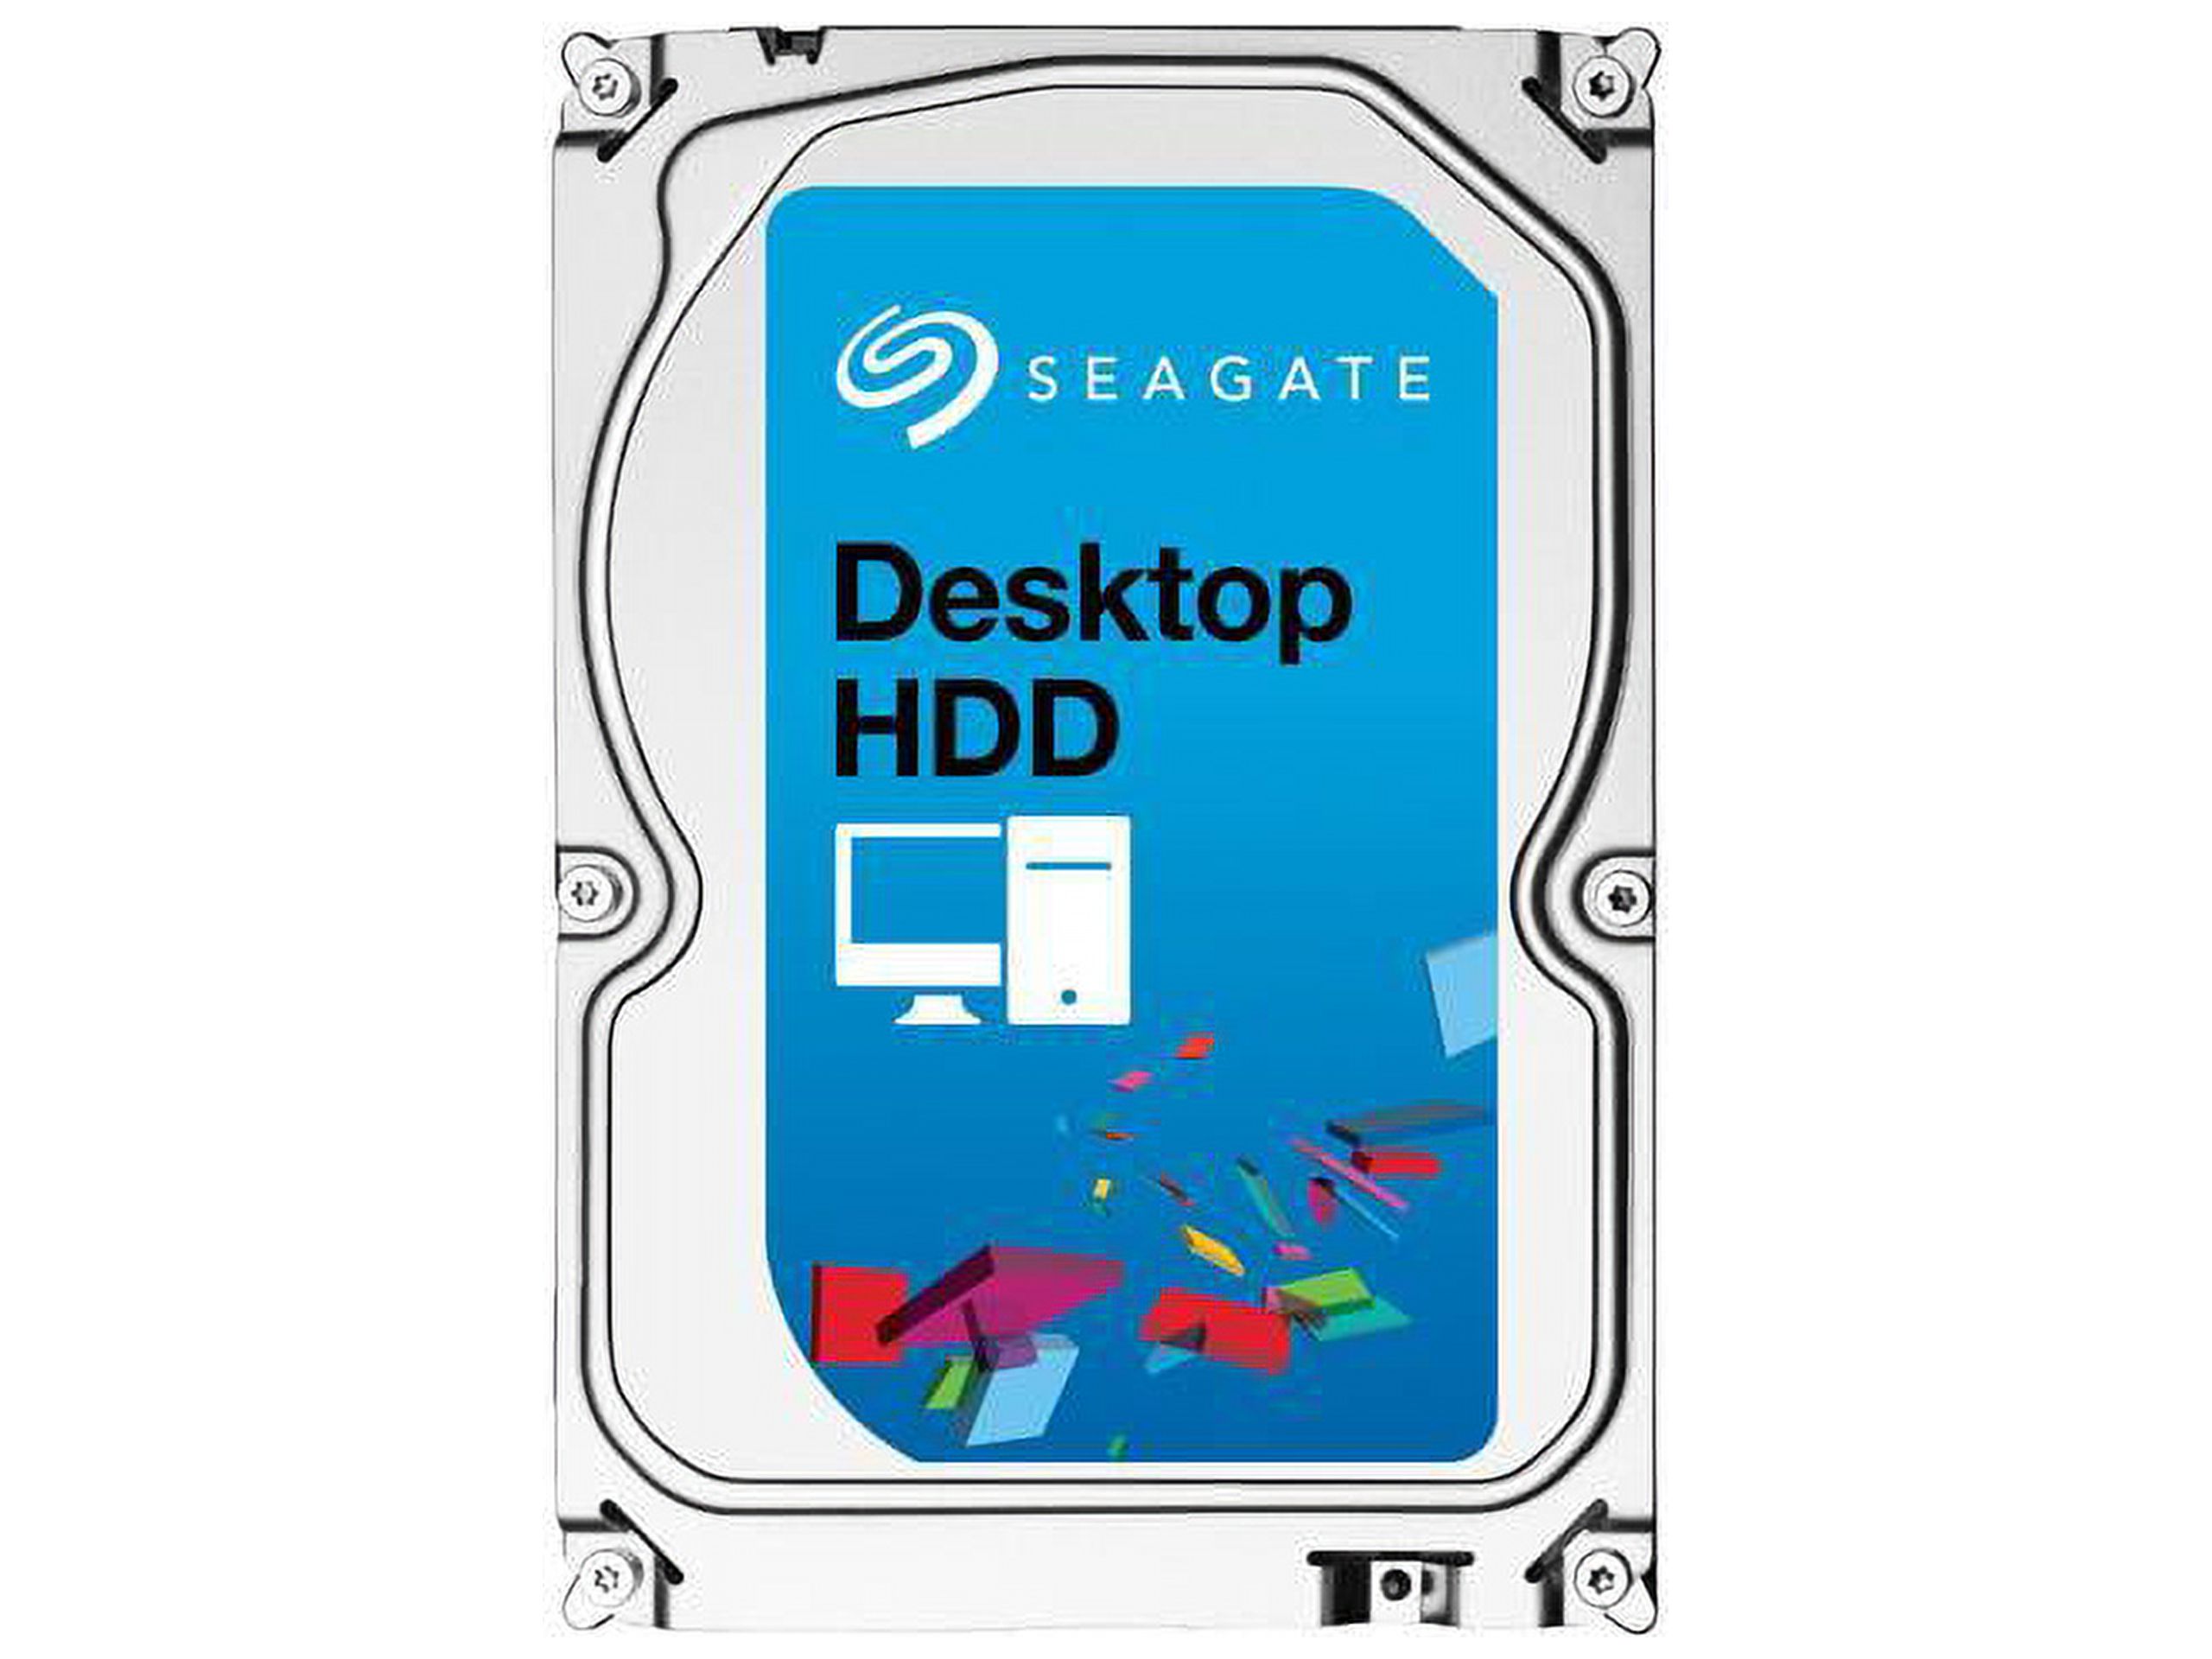 Seagate Desktop HDD ST1000DM003 1TB 64MB Cache SATA 6.0Gb/s 3.5" Internal Hard Drive Bare Drive - image 1 of 3